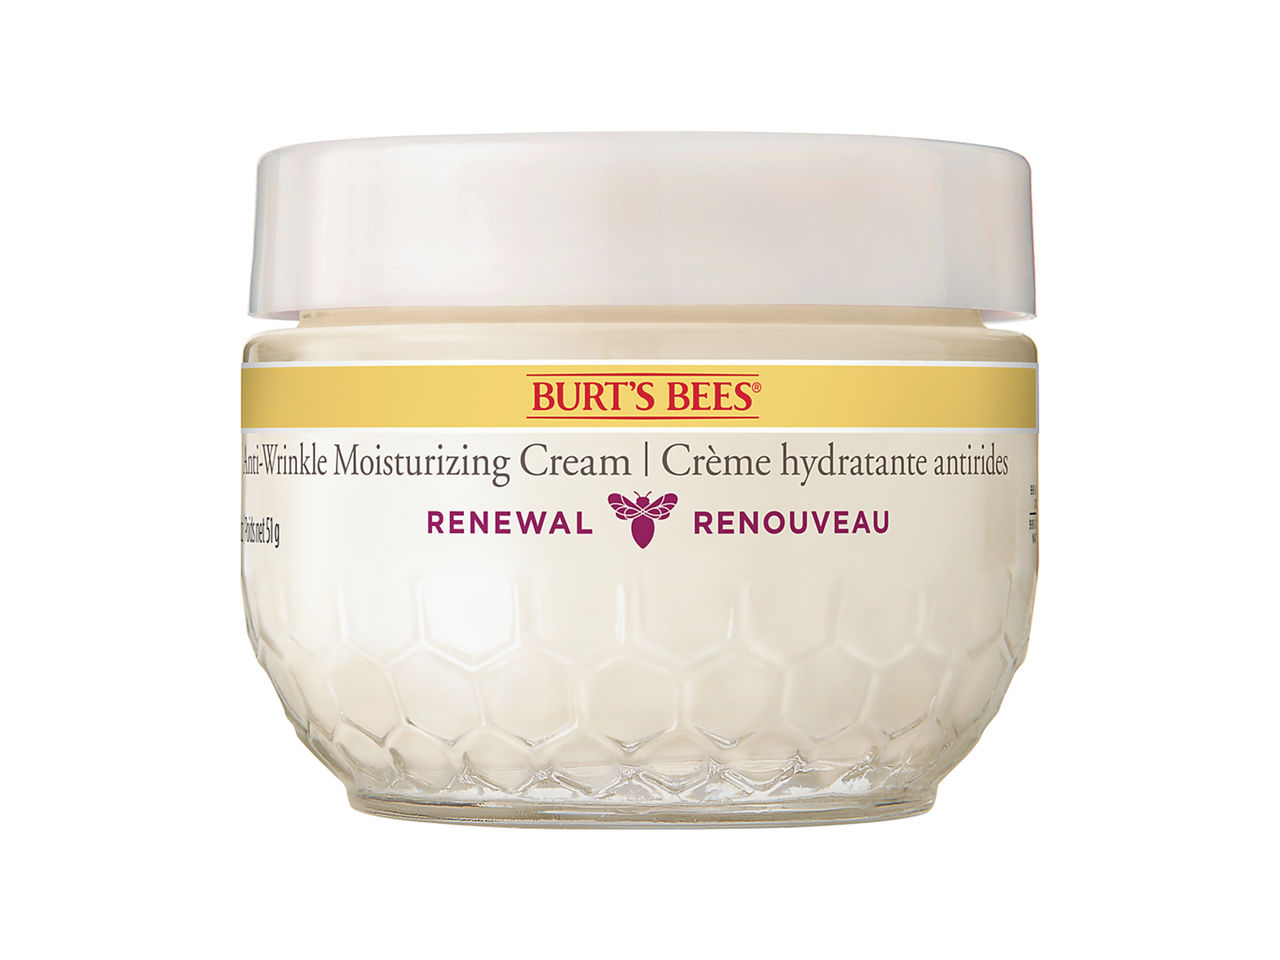 A jar of Burt's Bees Renewal Moisturizing Cream.